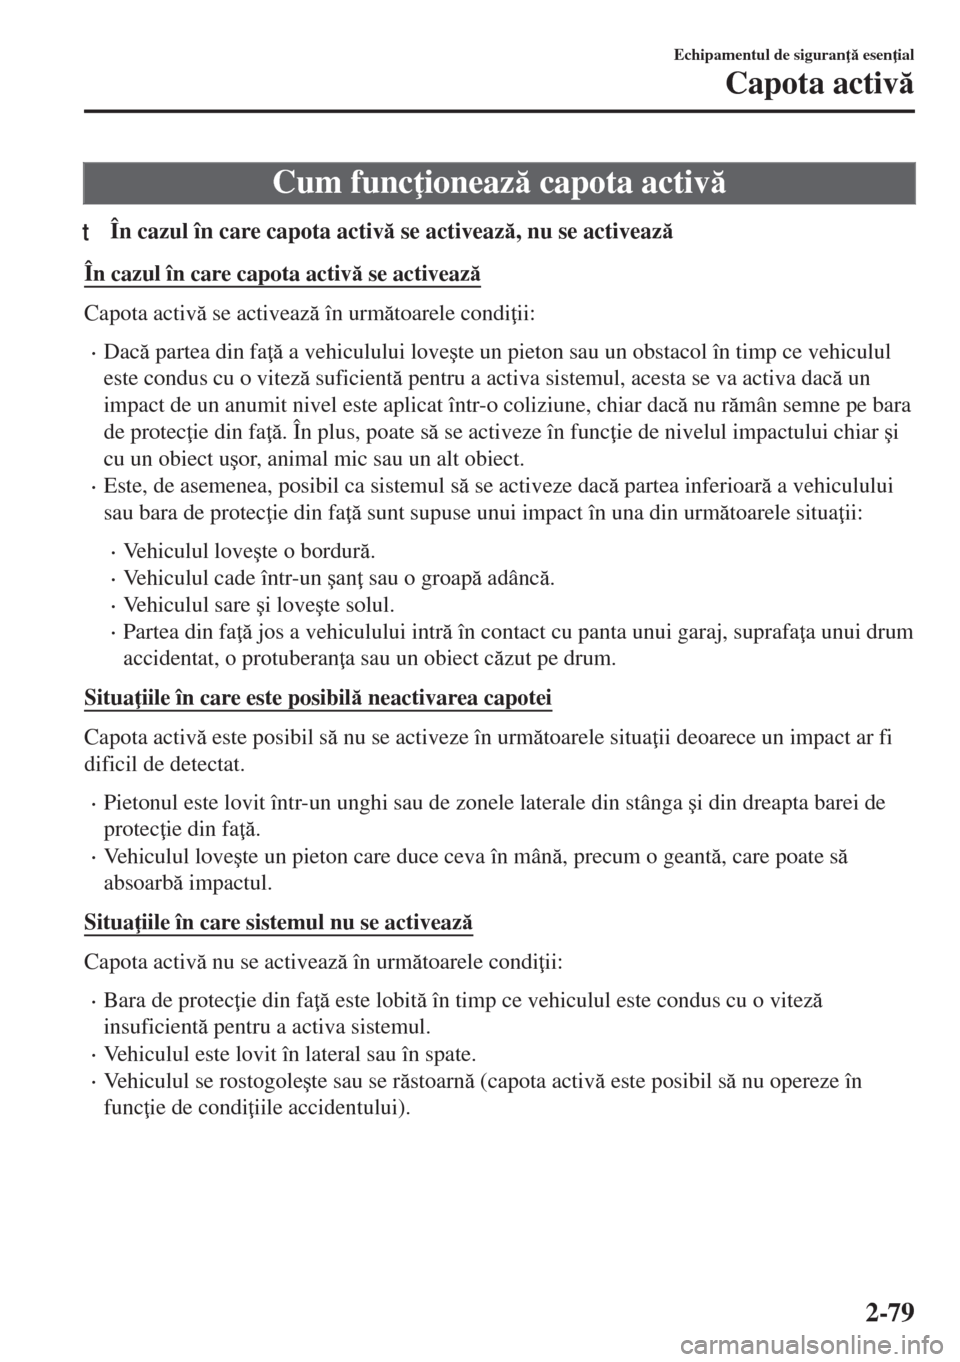 MAZDA MODEL 6 2018  Manualul de utilizare (in Romanian) Cum func ioneaz capota activ
tÎn cazul în care capota activ se activeaz, nu se activeaz
În cazul în care capota activ se activeaz
Capota activ se activeaz în urmtoarele condi